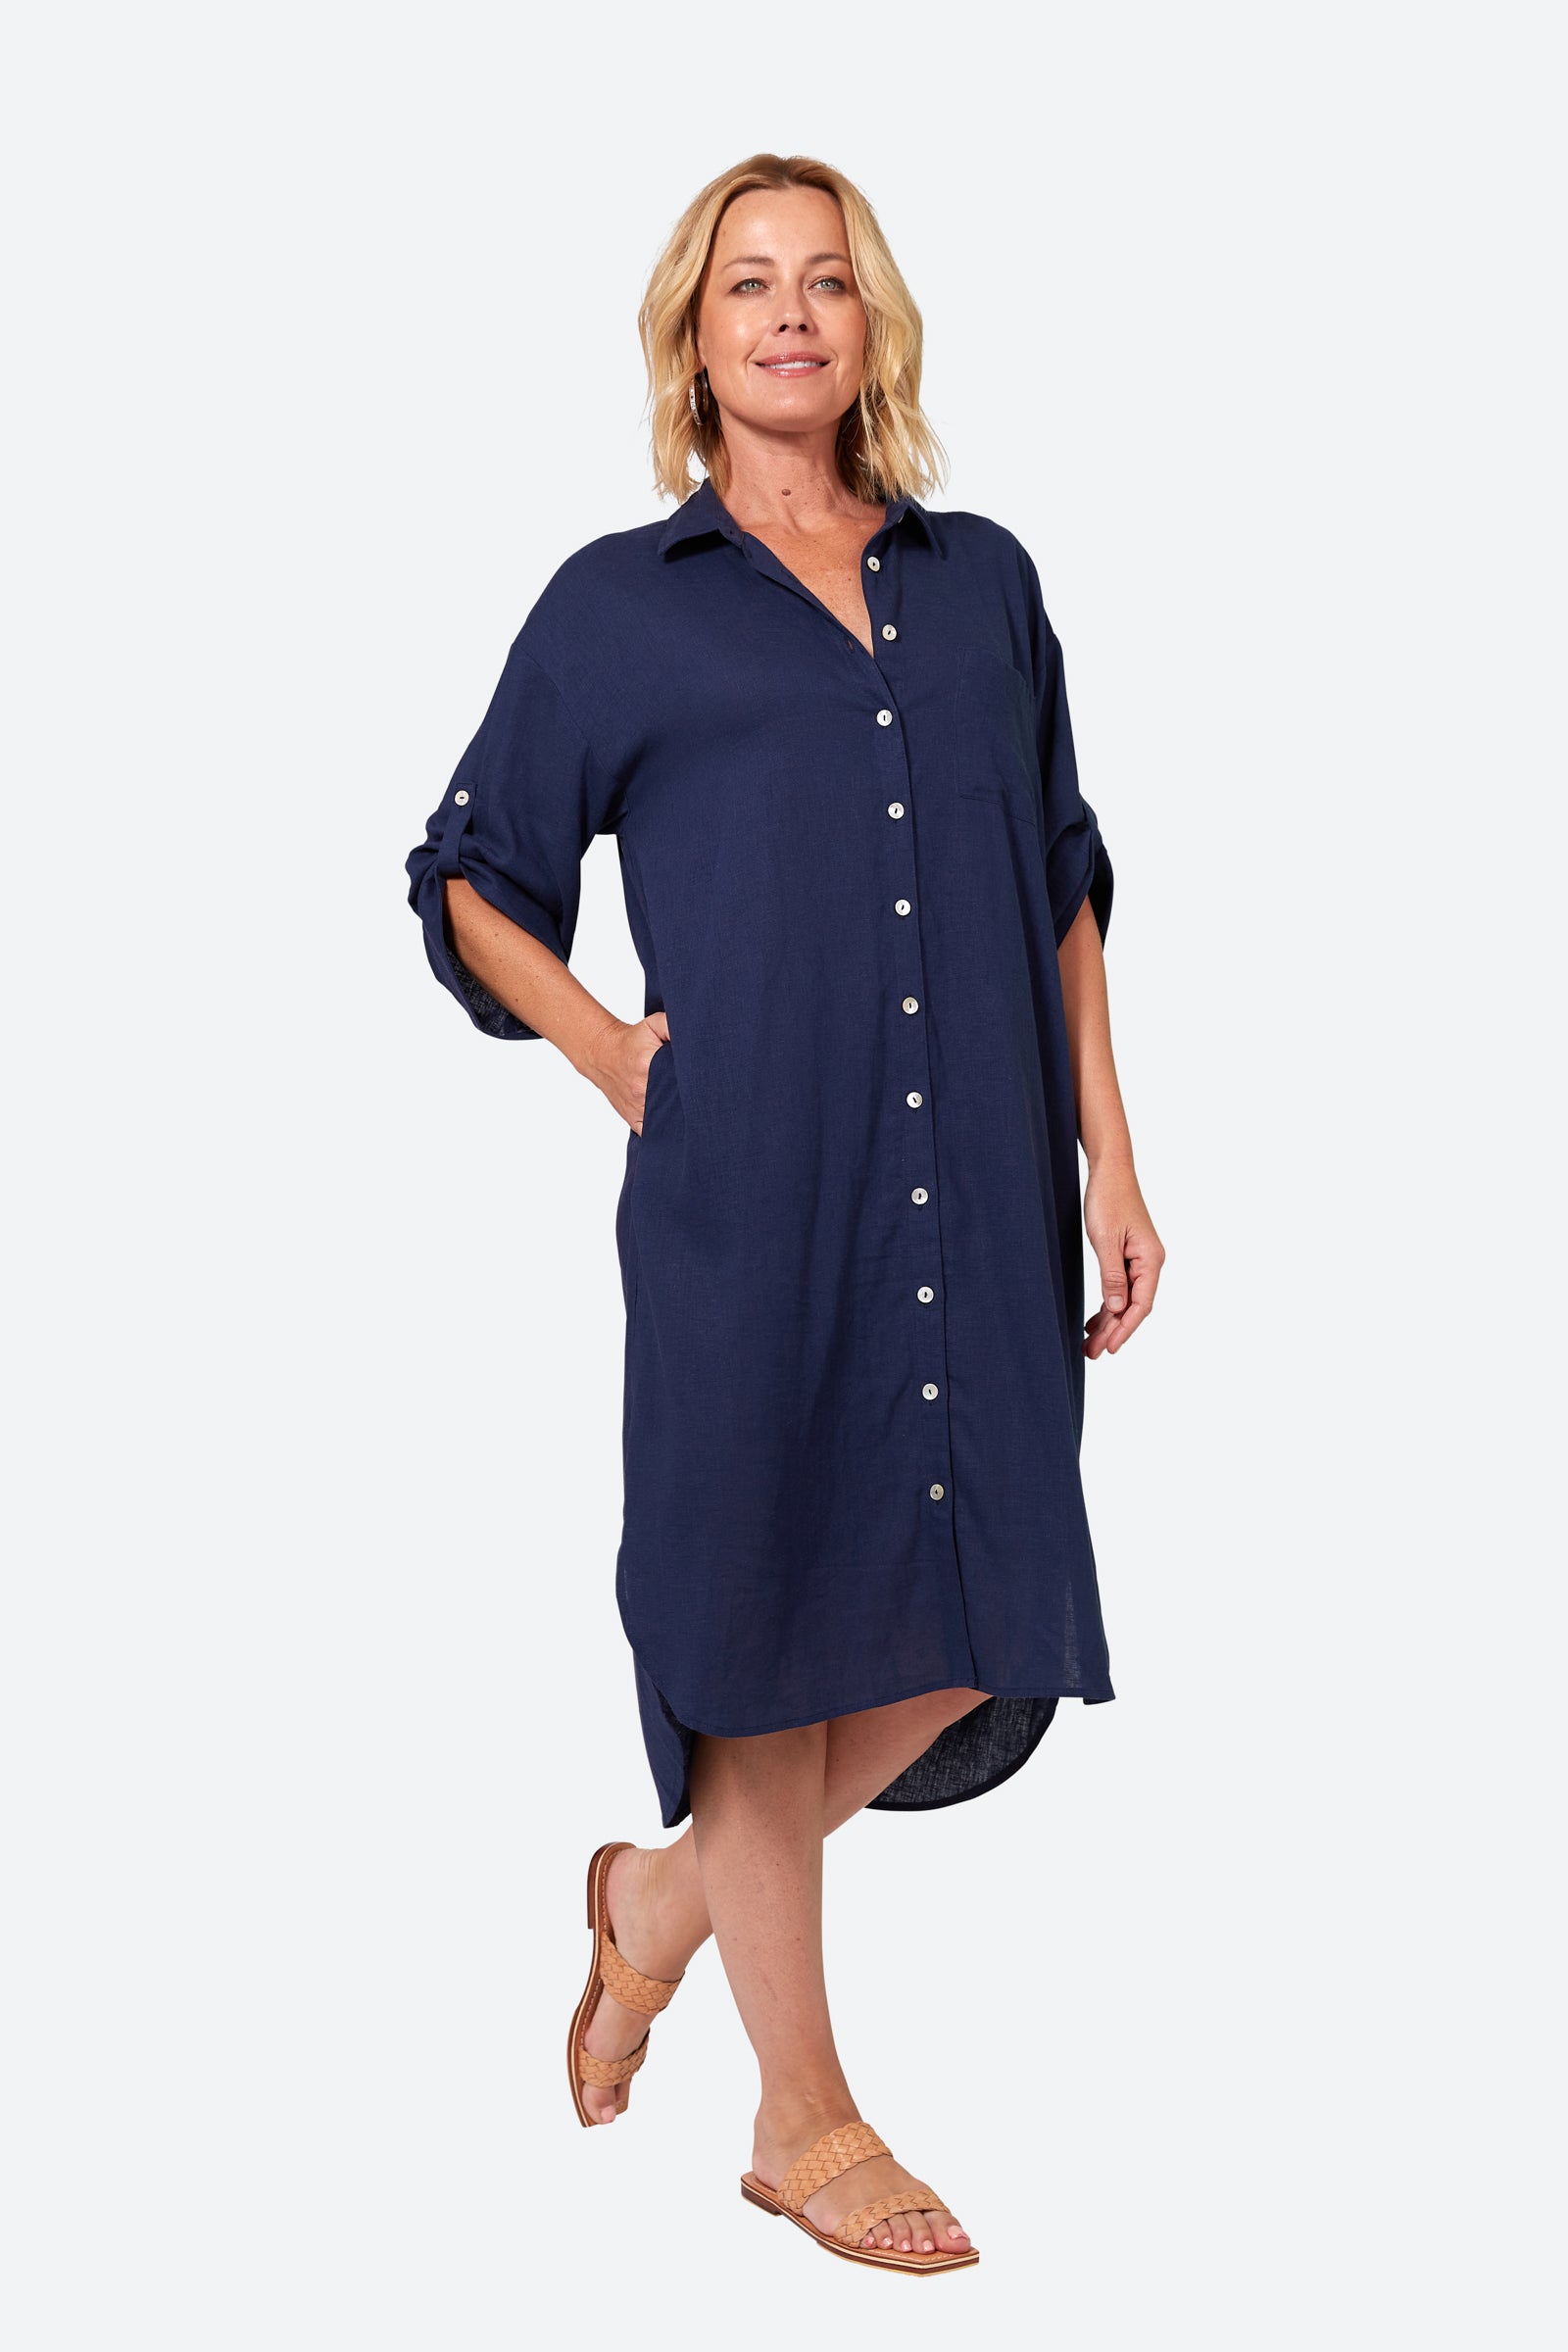 Verve Shirt Dress - Sapphire - eb&ive Clothing - Shirt Dress Mid Linen